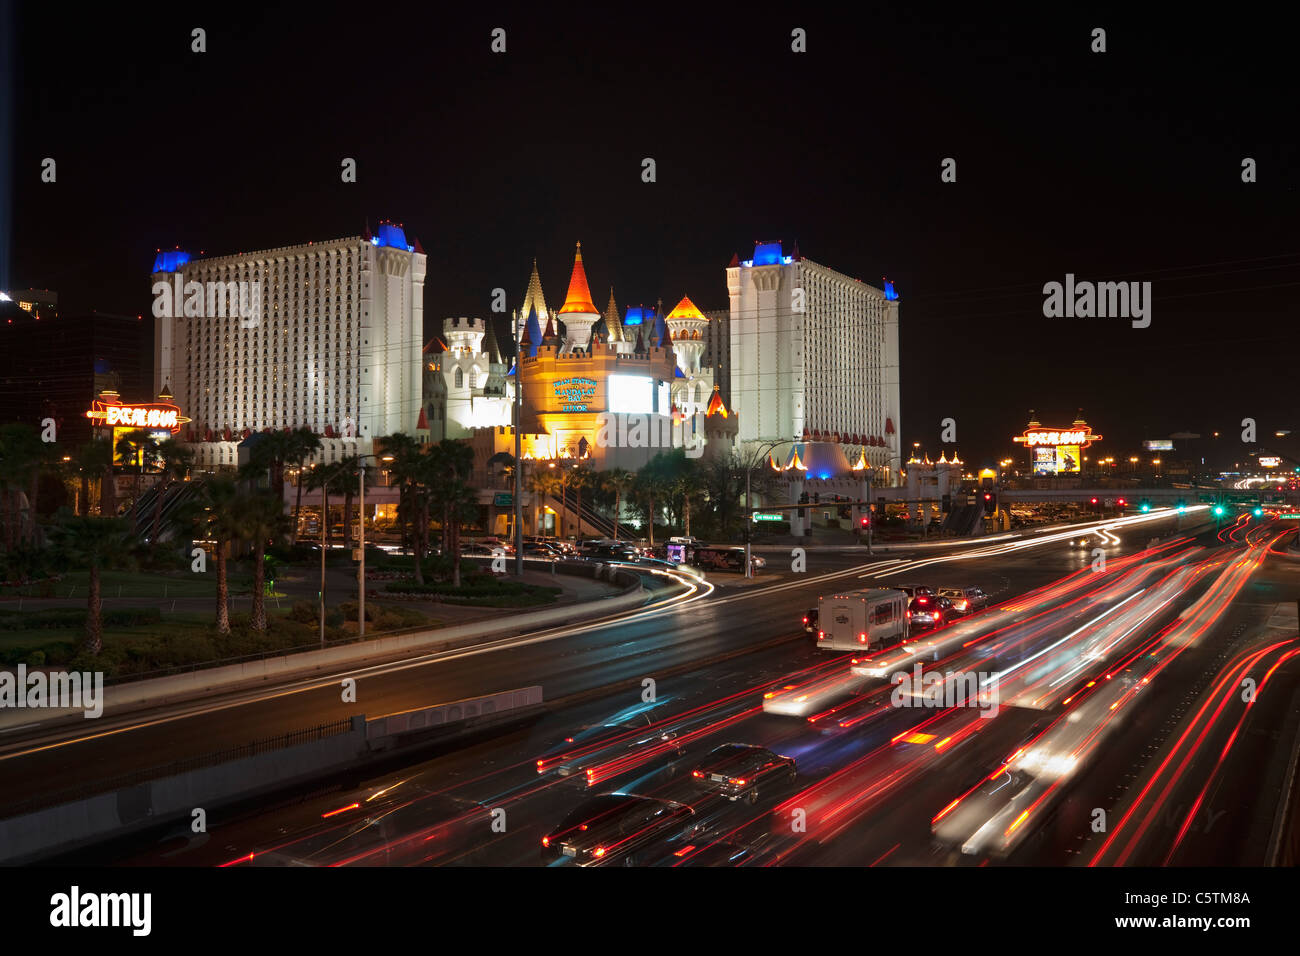 USA, Las Vegas, Excalibur hotel and casino at night Stock Photo